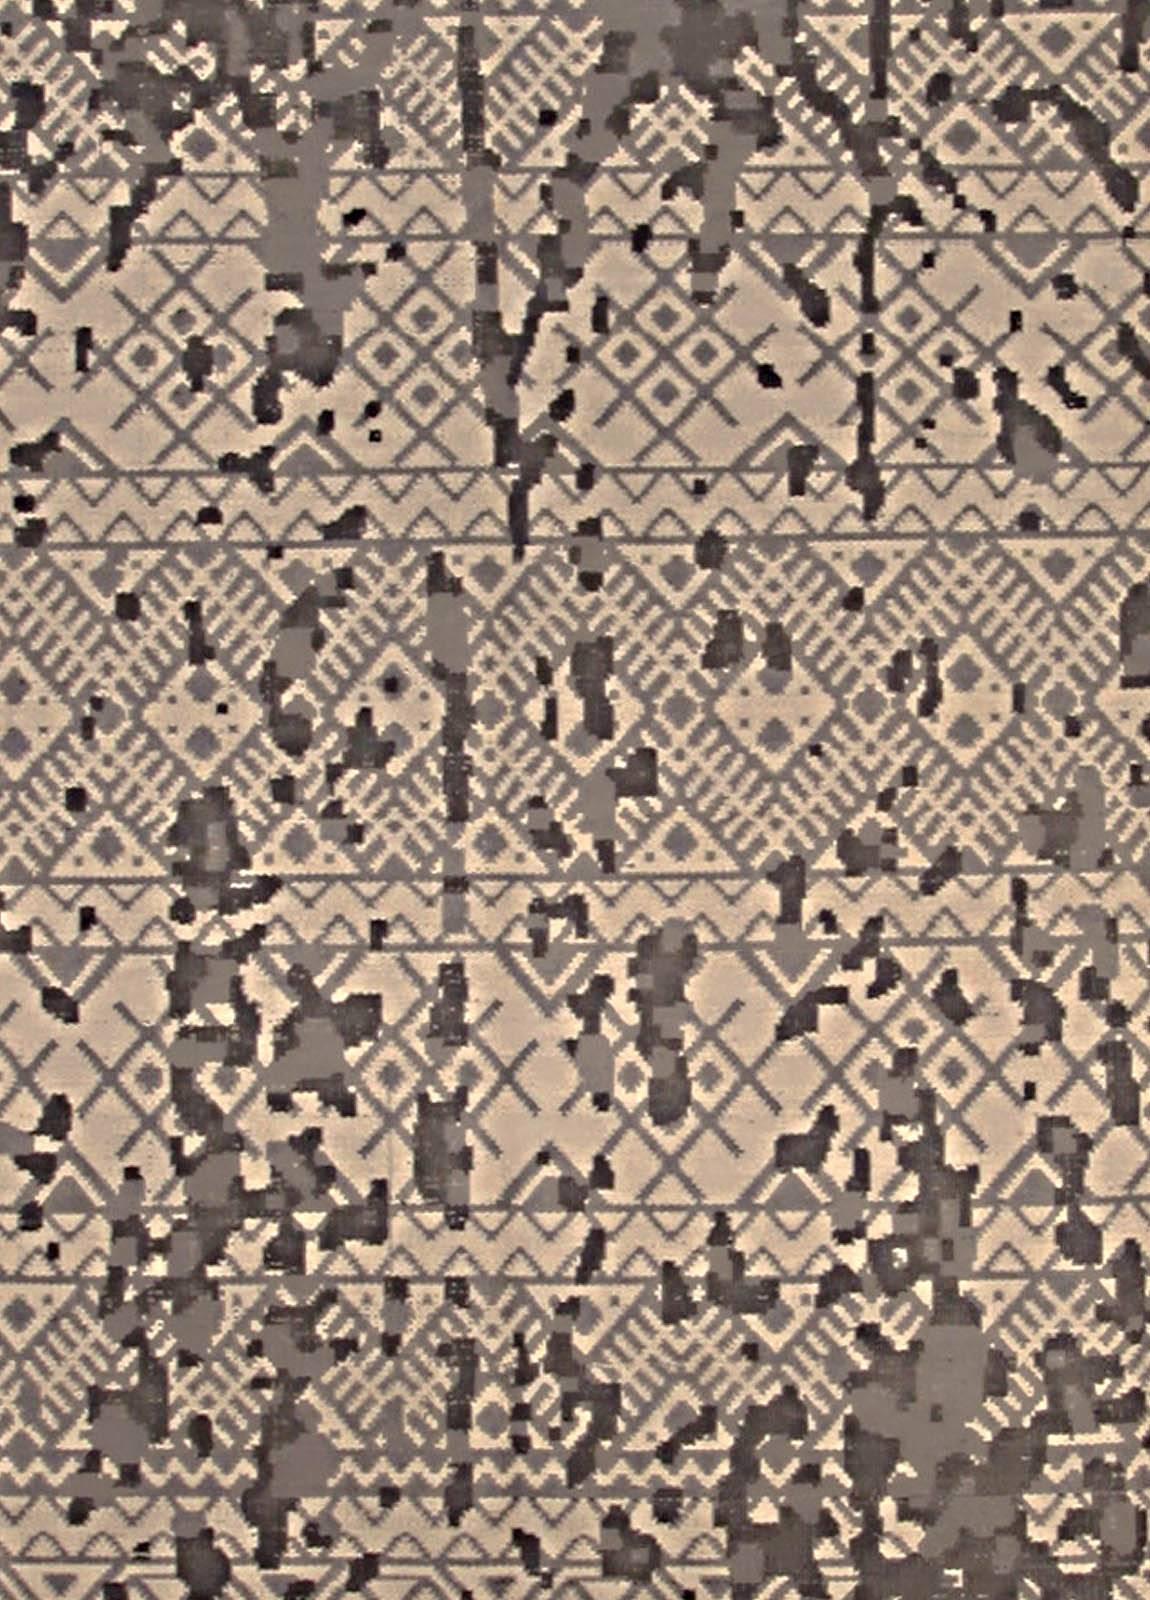 Large petra abstract design handmade wool rug by Doris Leslie Blau.
Size: 14'0